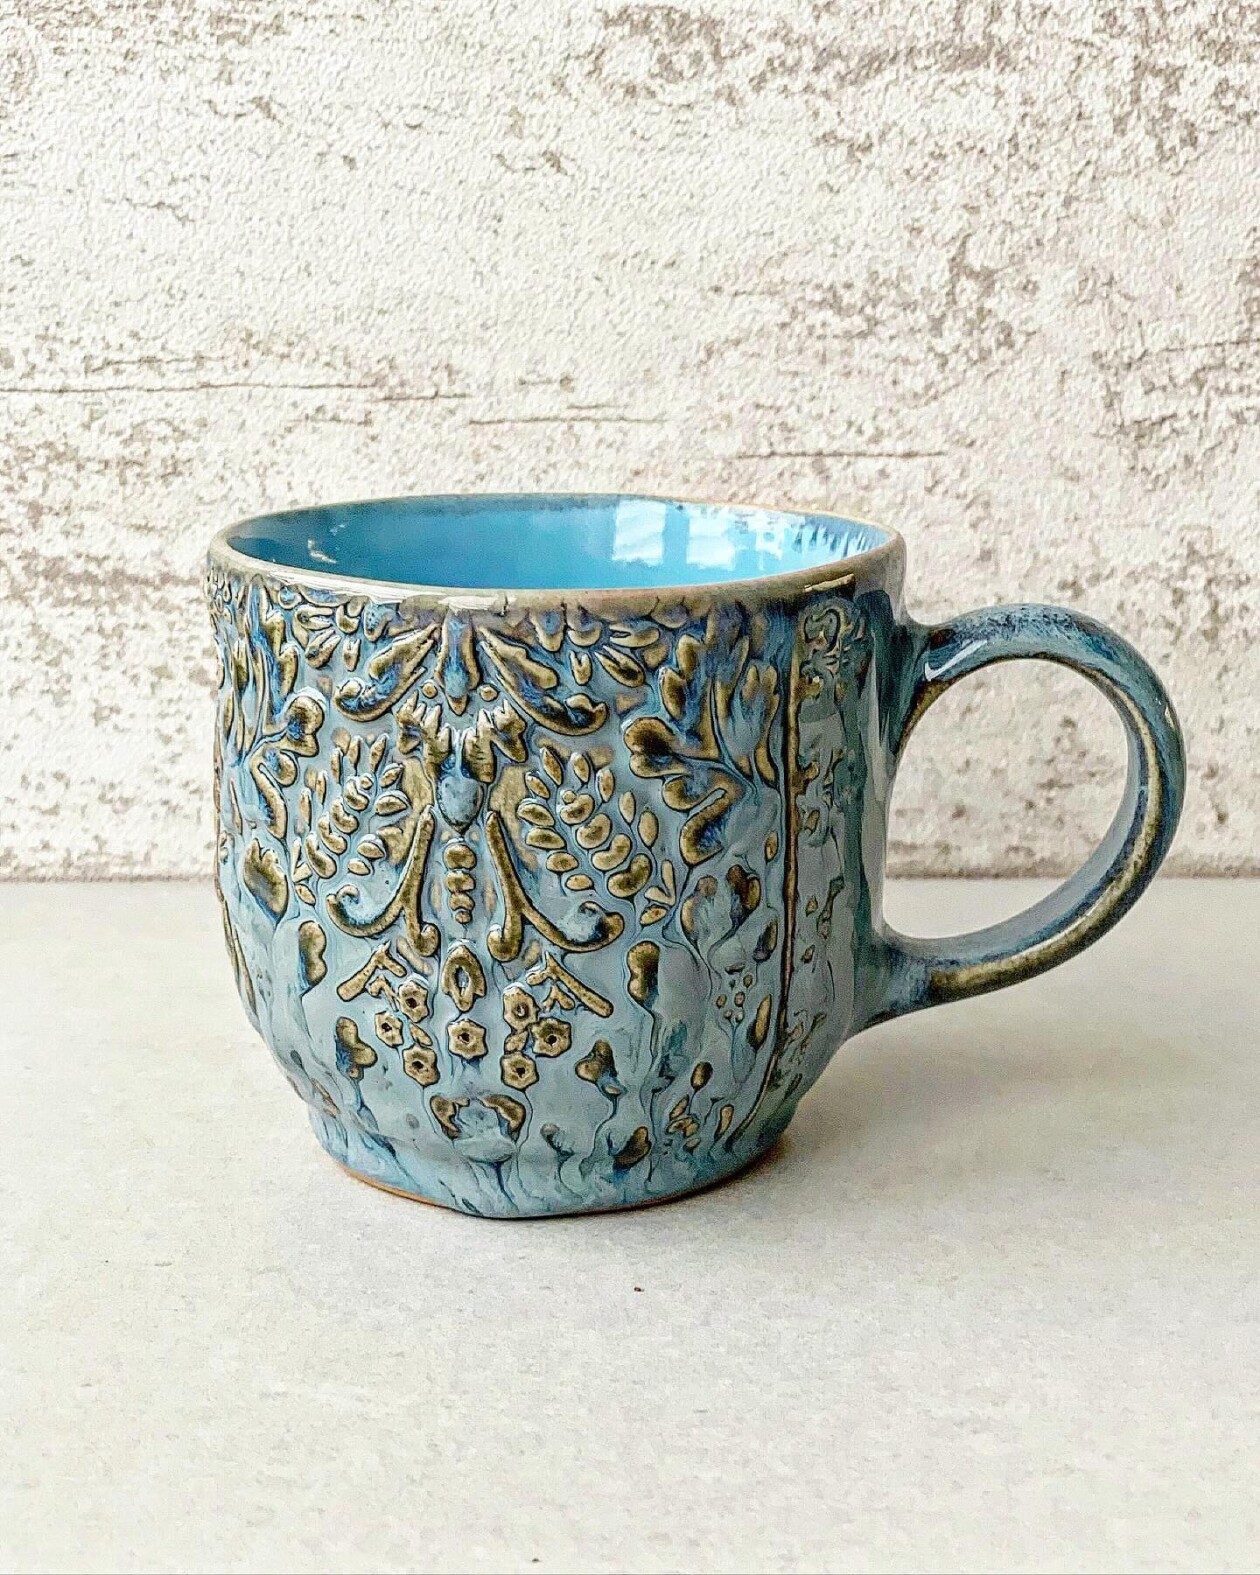 Ceramics With Vintage Motifs By Joanna Dylowska (20)